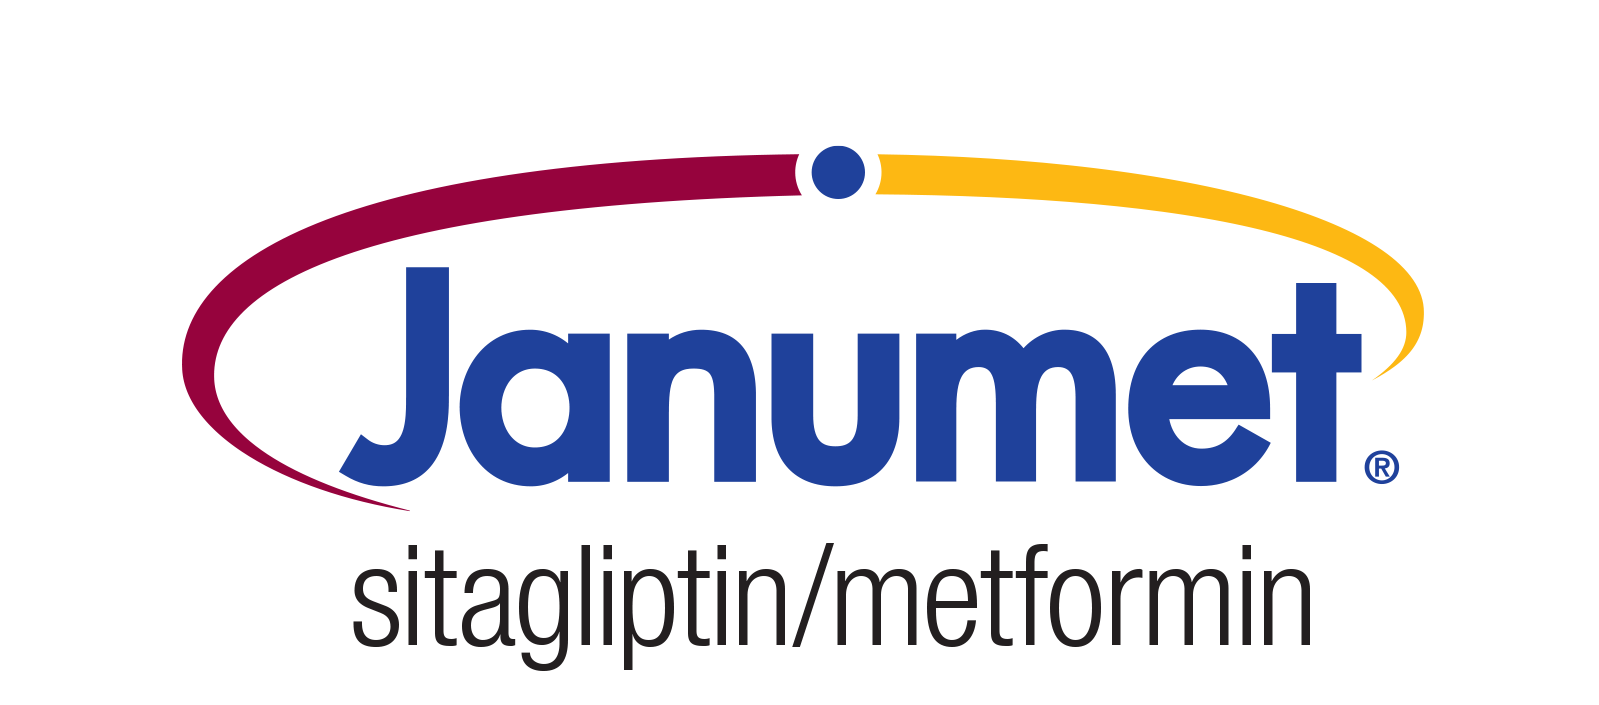 Janumet logo